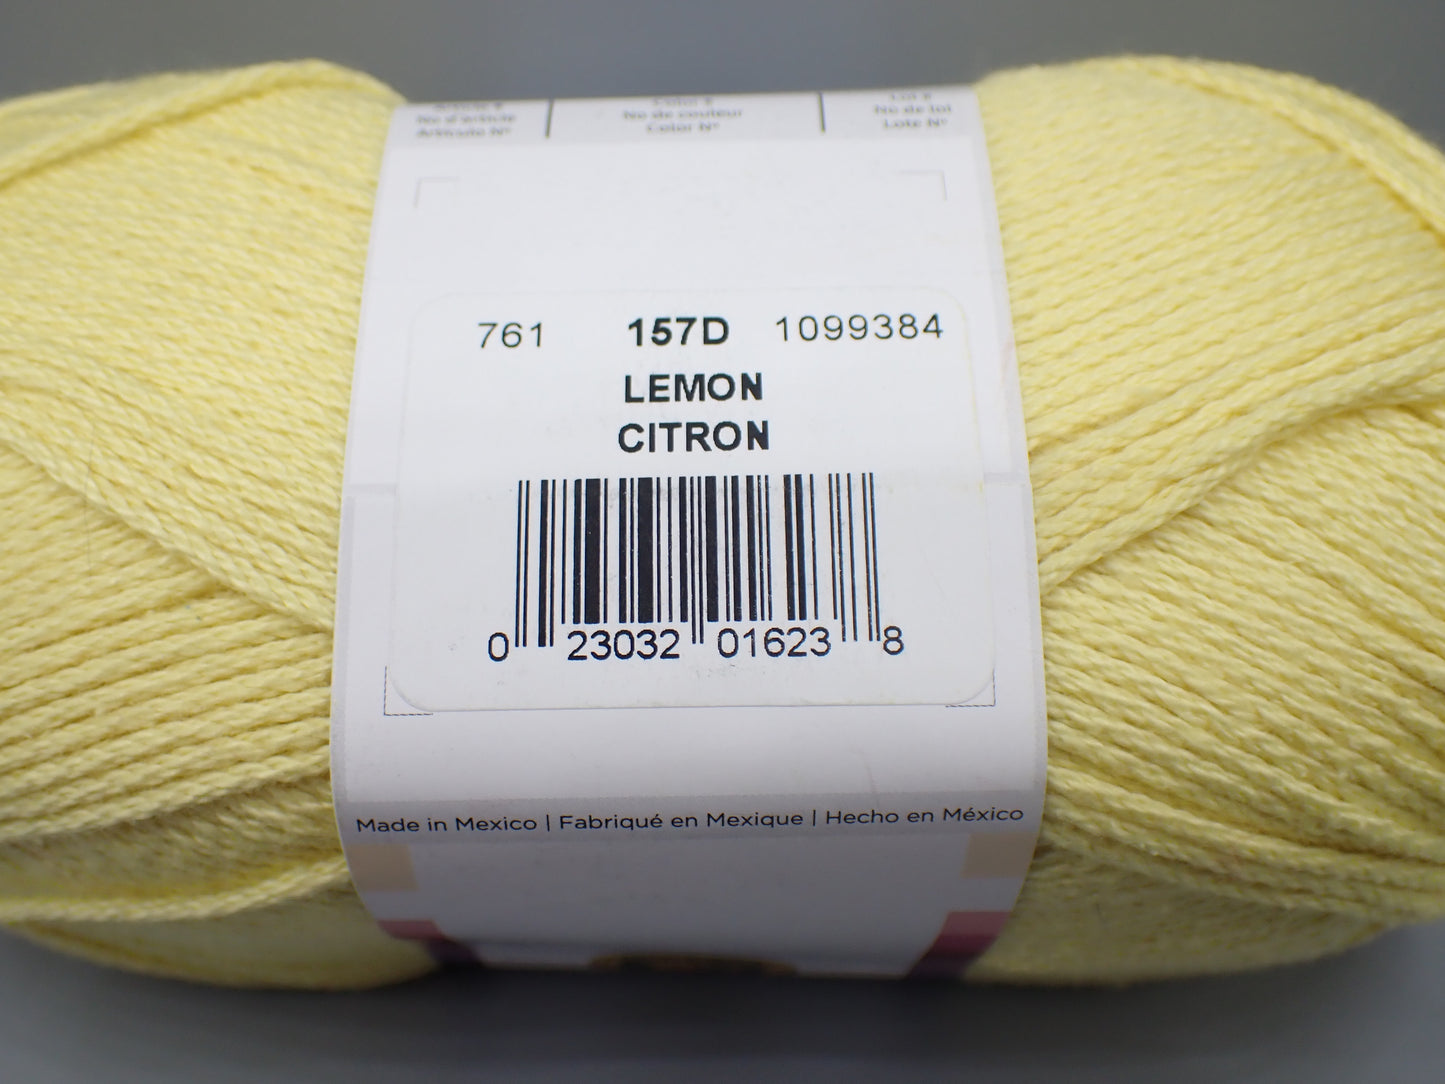 Lion Brand Yarns Worsted weight 24/7 Cotton Yarn Lemon